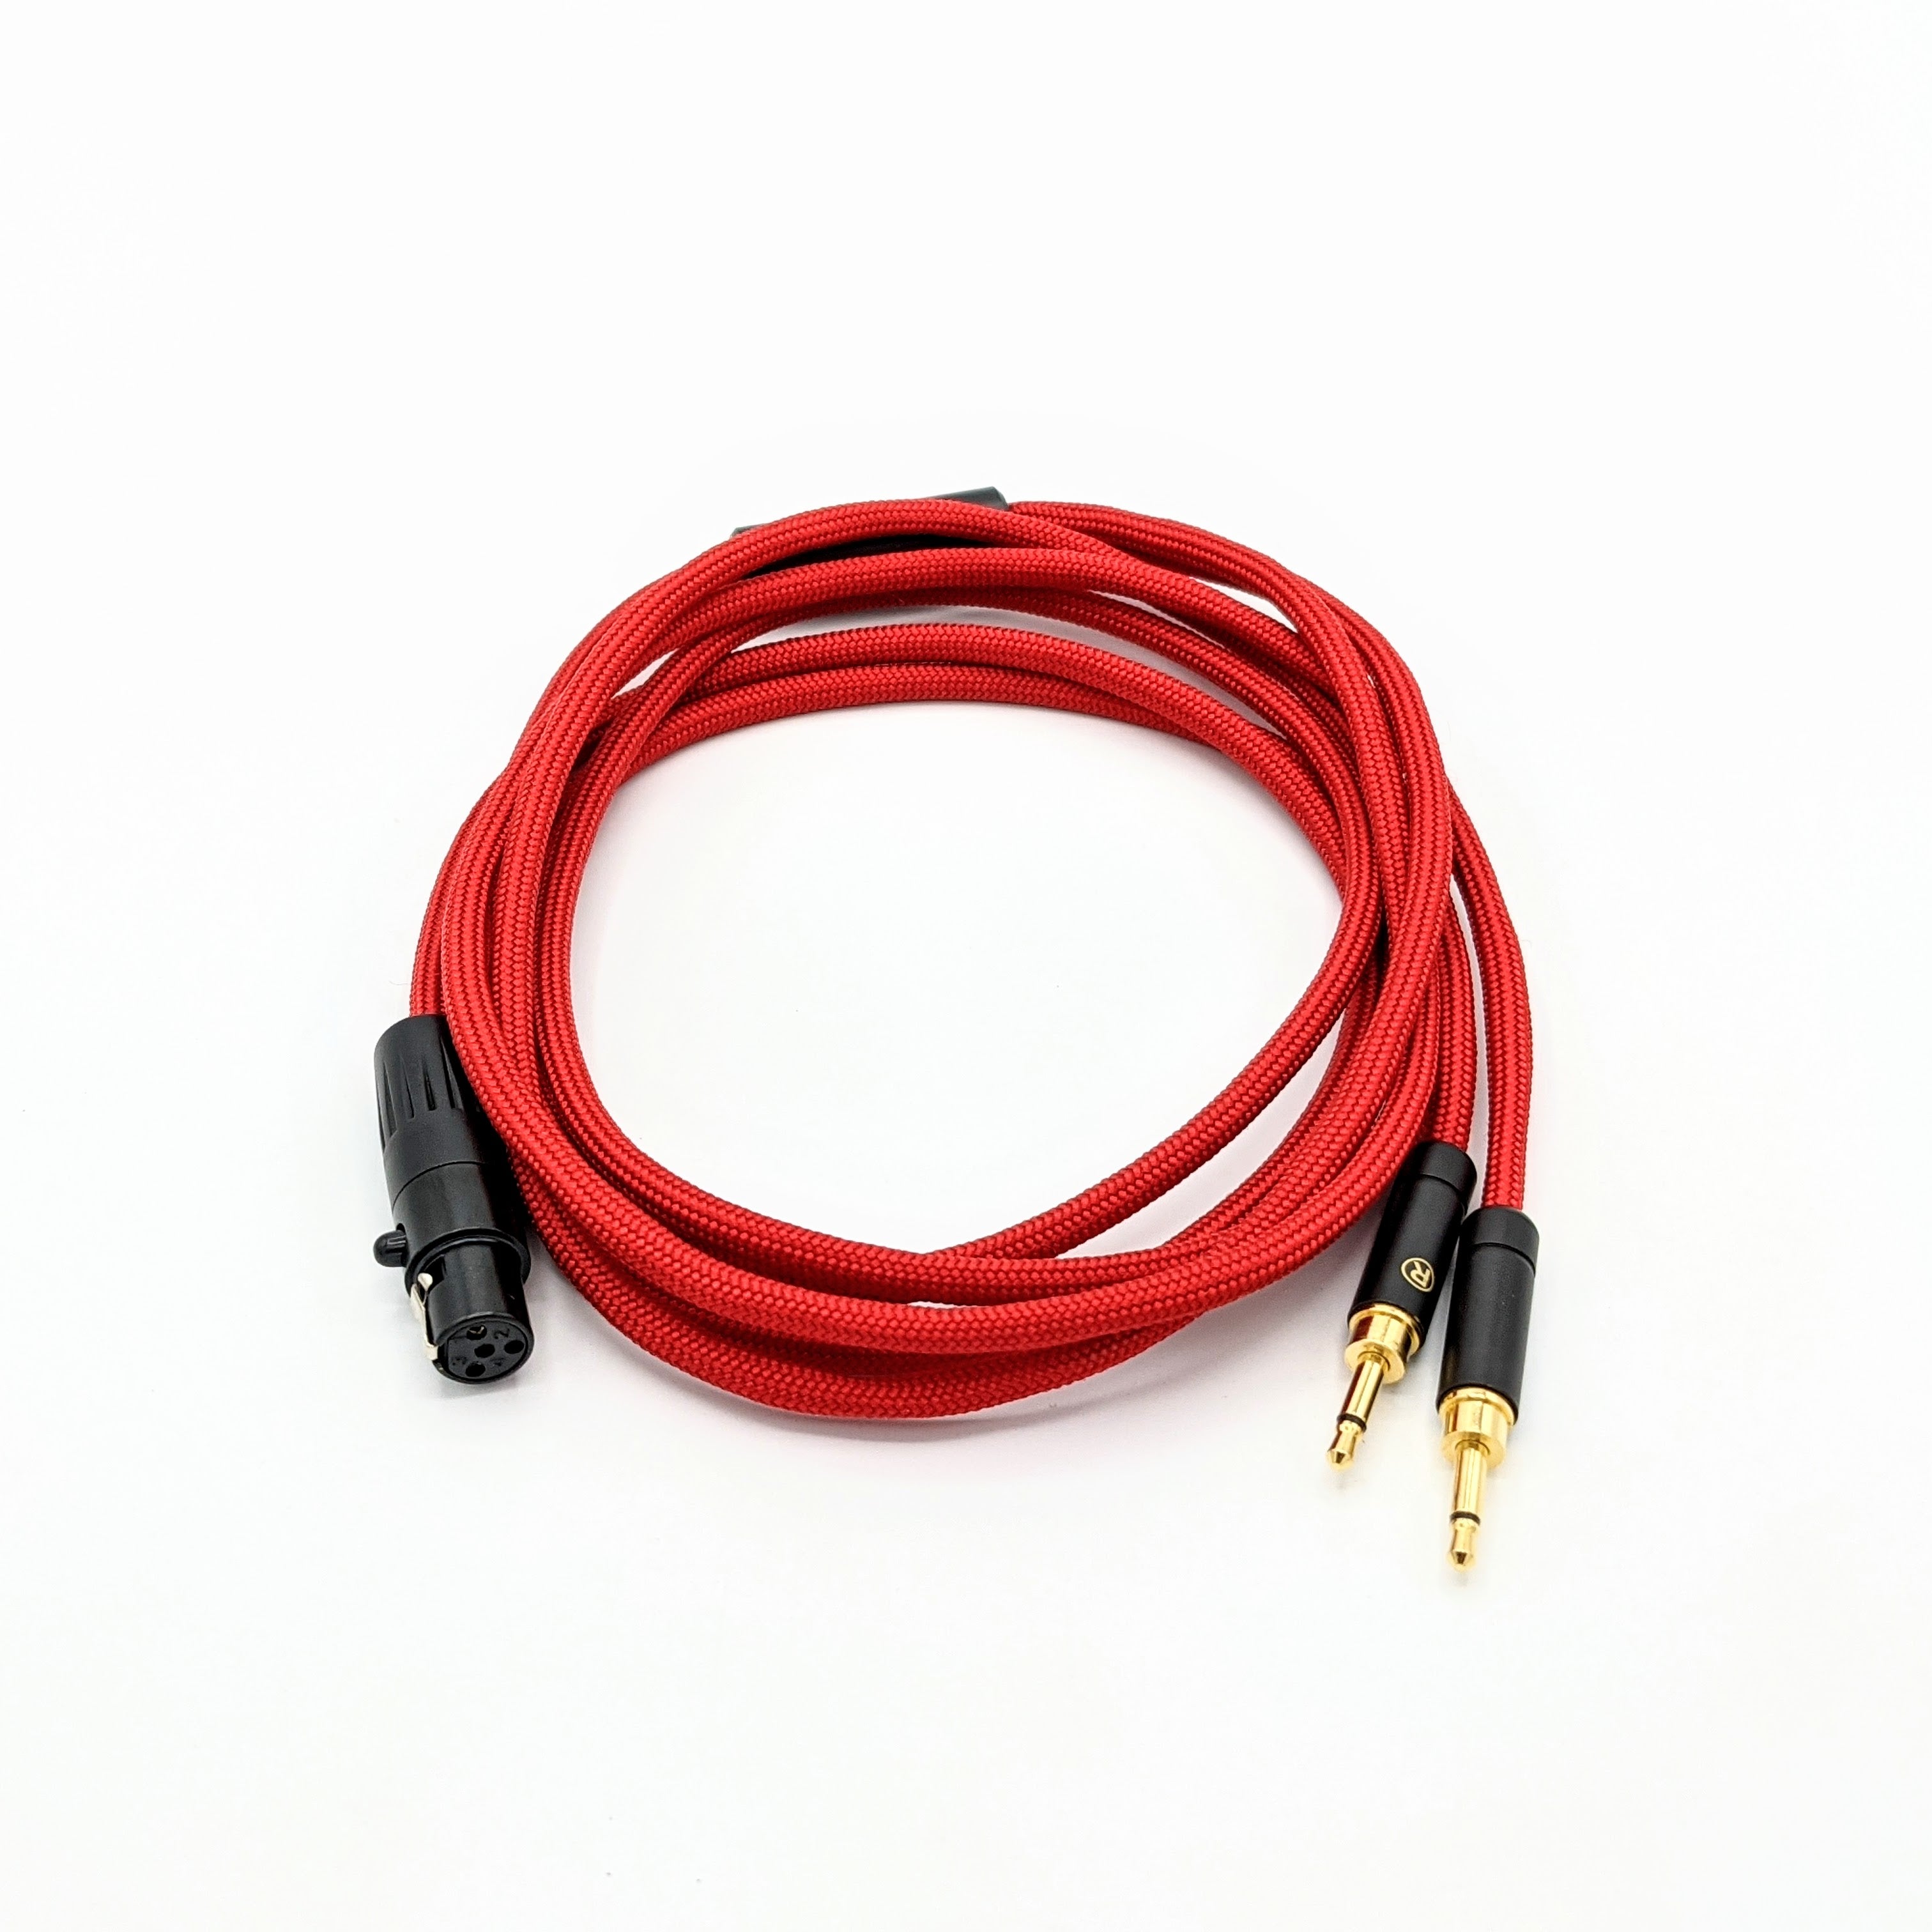 HC-7: Dual 2.5mm Mono TS Balanced Headphone Cable